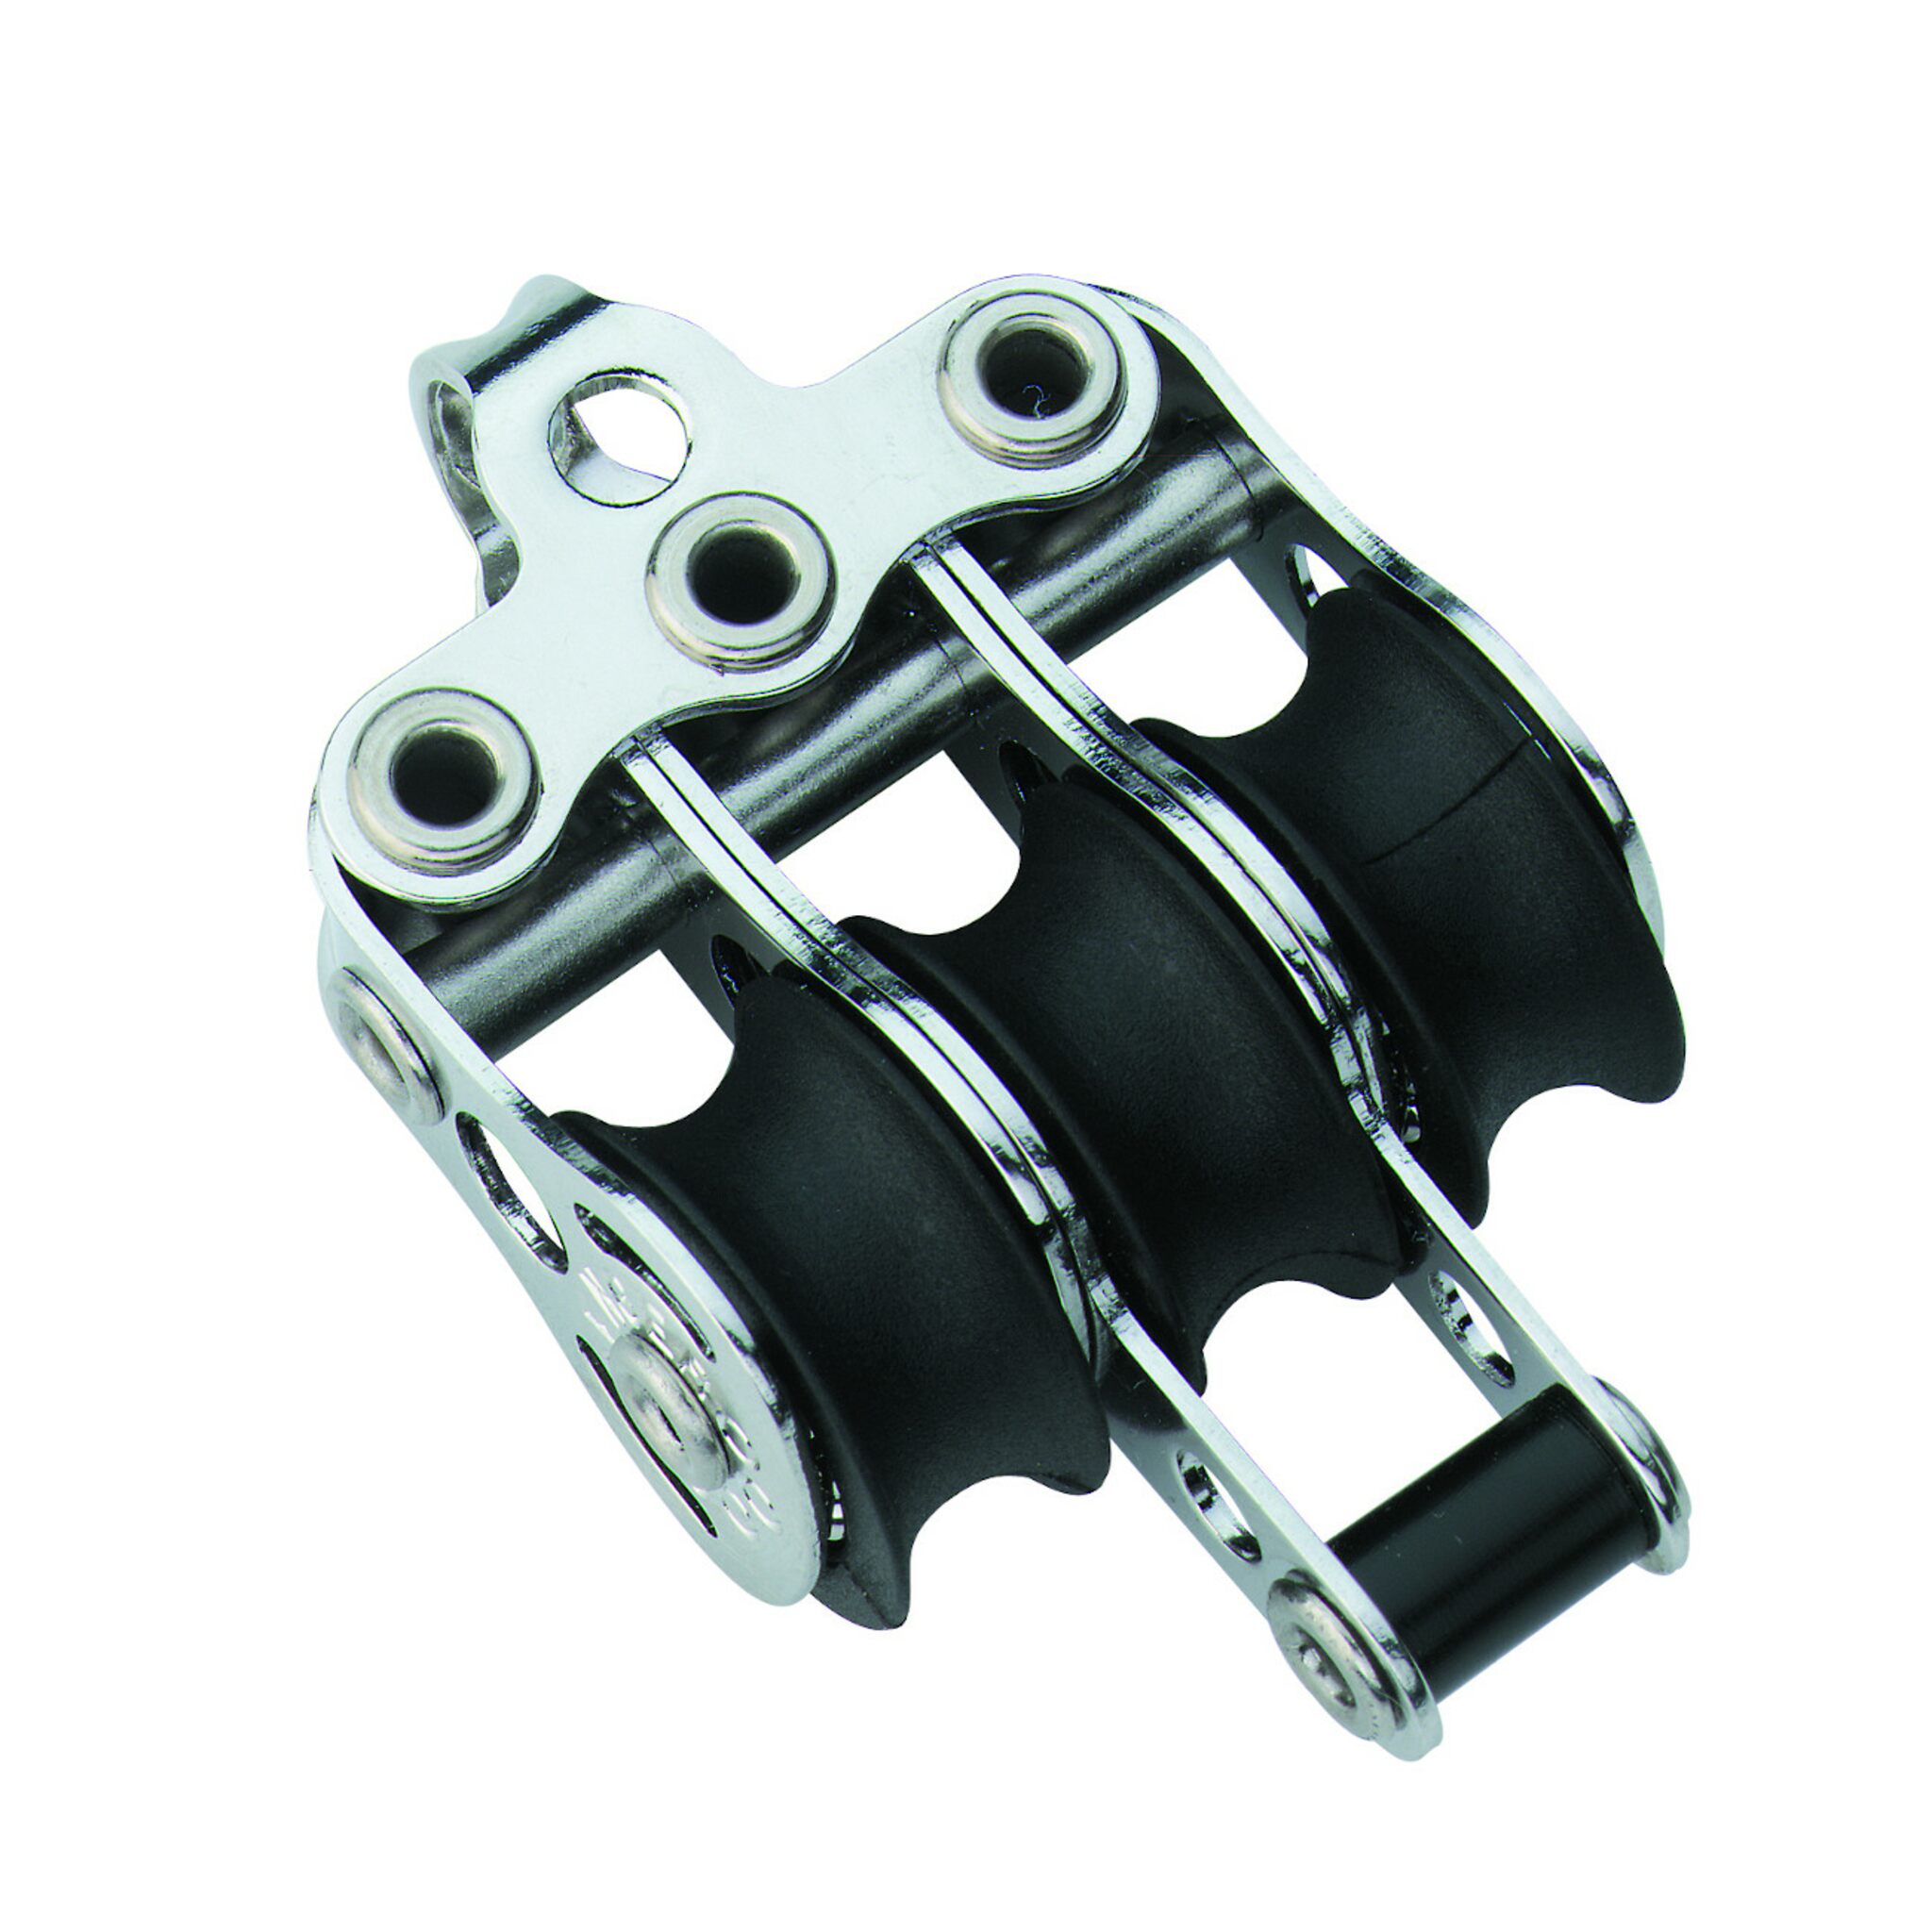 Sprenger Micro XS ball bearing block, three-row with shackle and dogfott